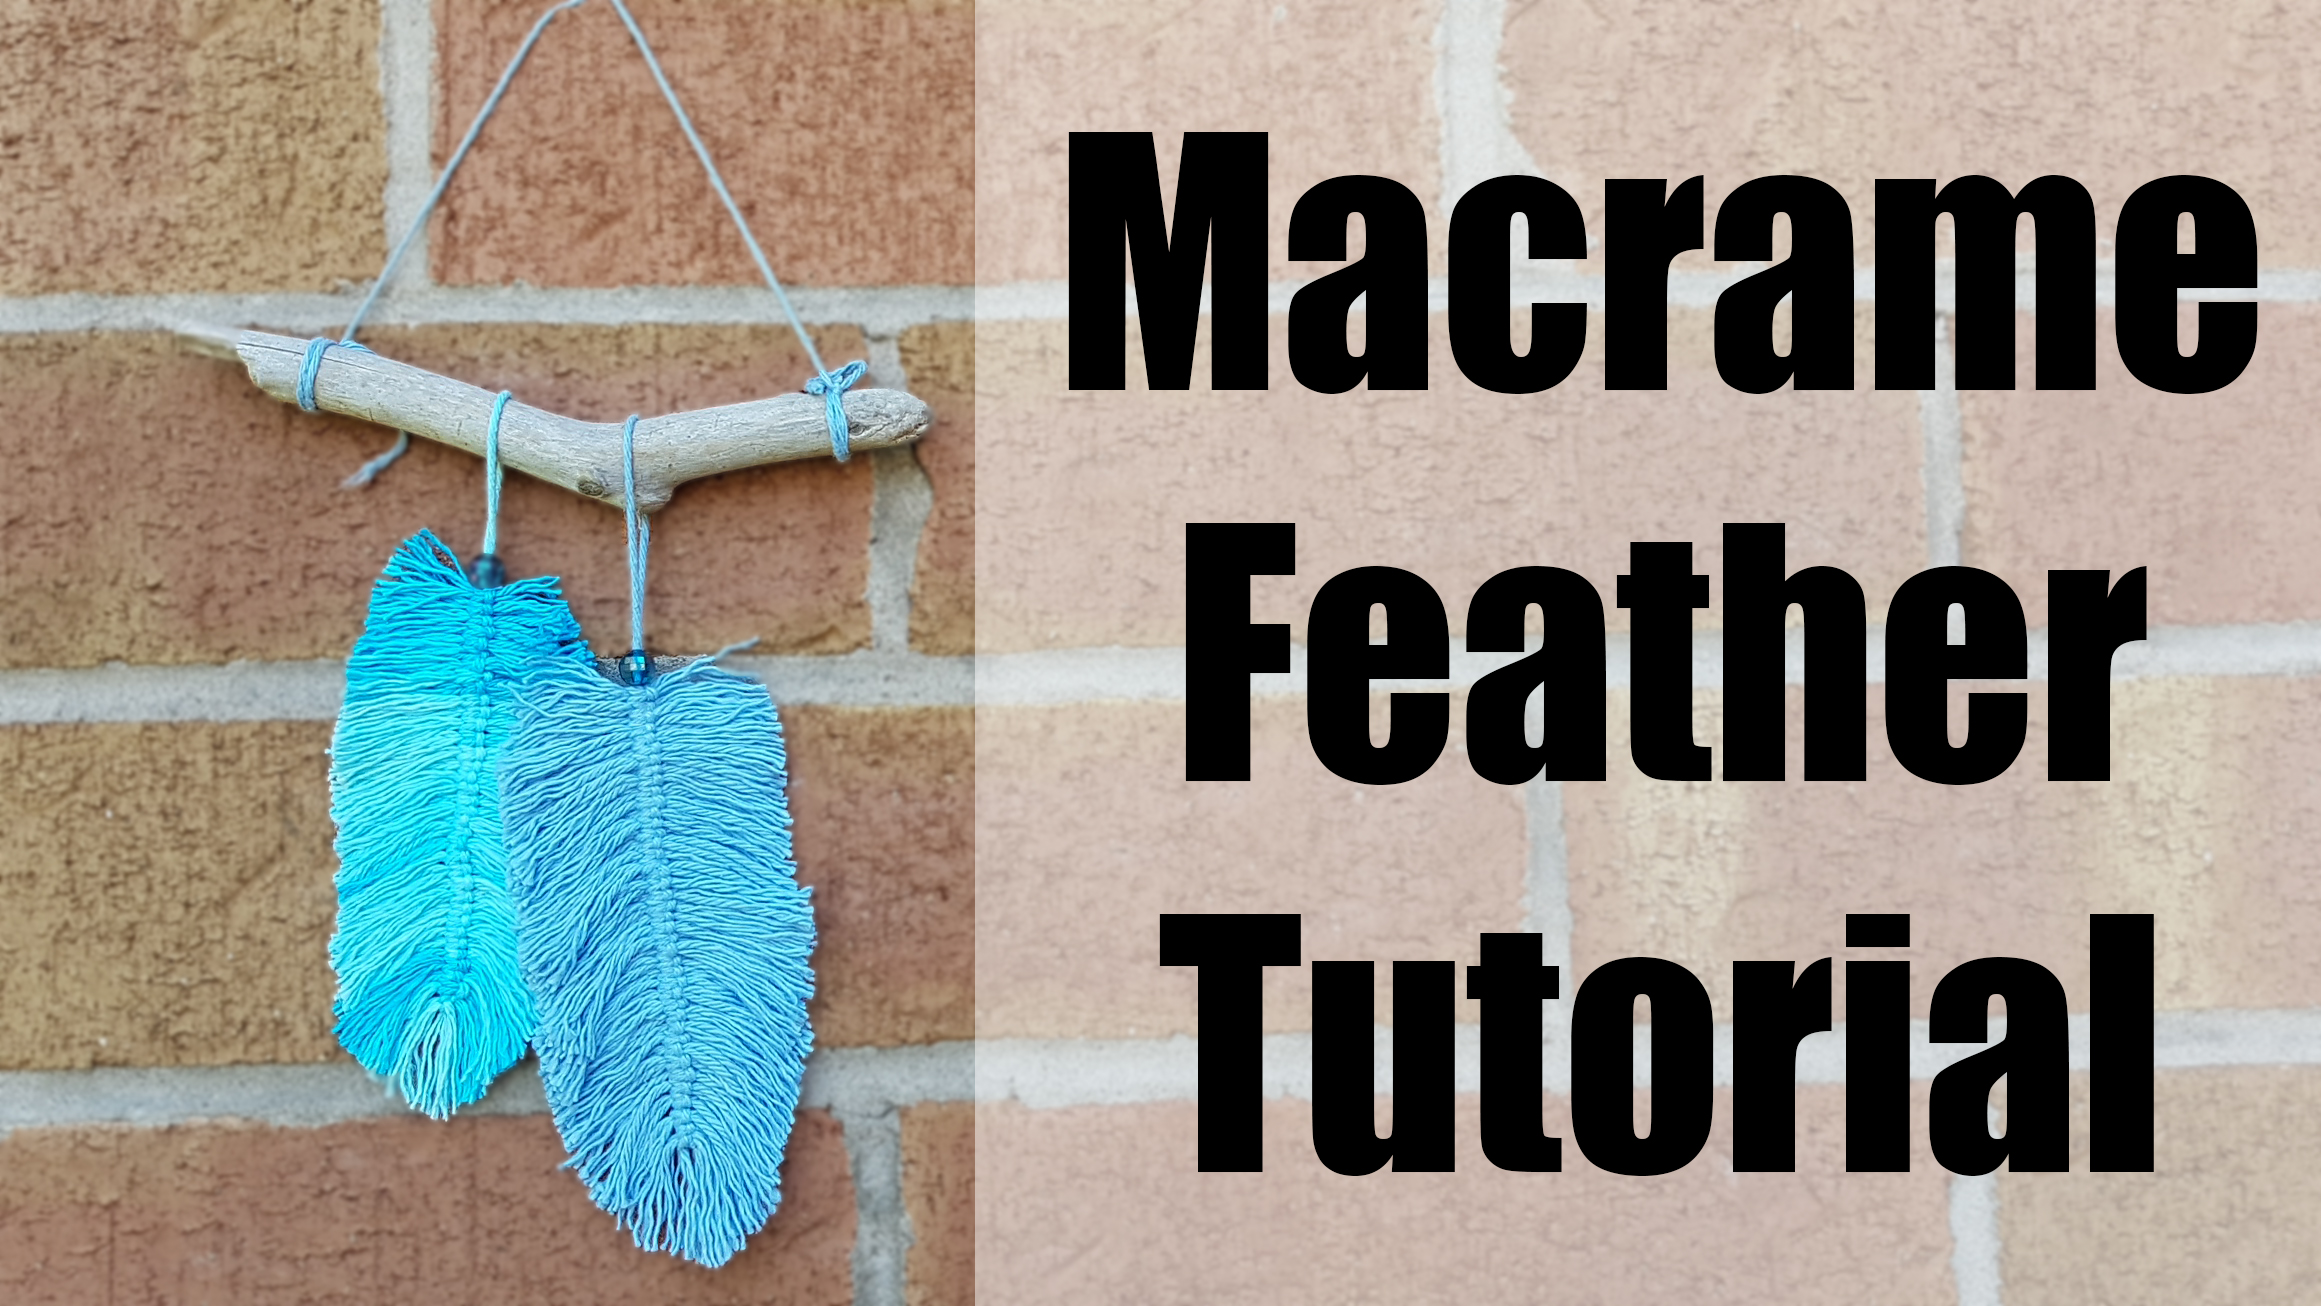 Macrame Feather large 32cm x 22cm deluxe cotton 